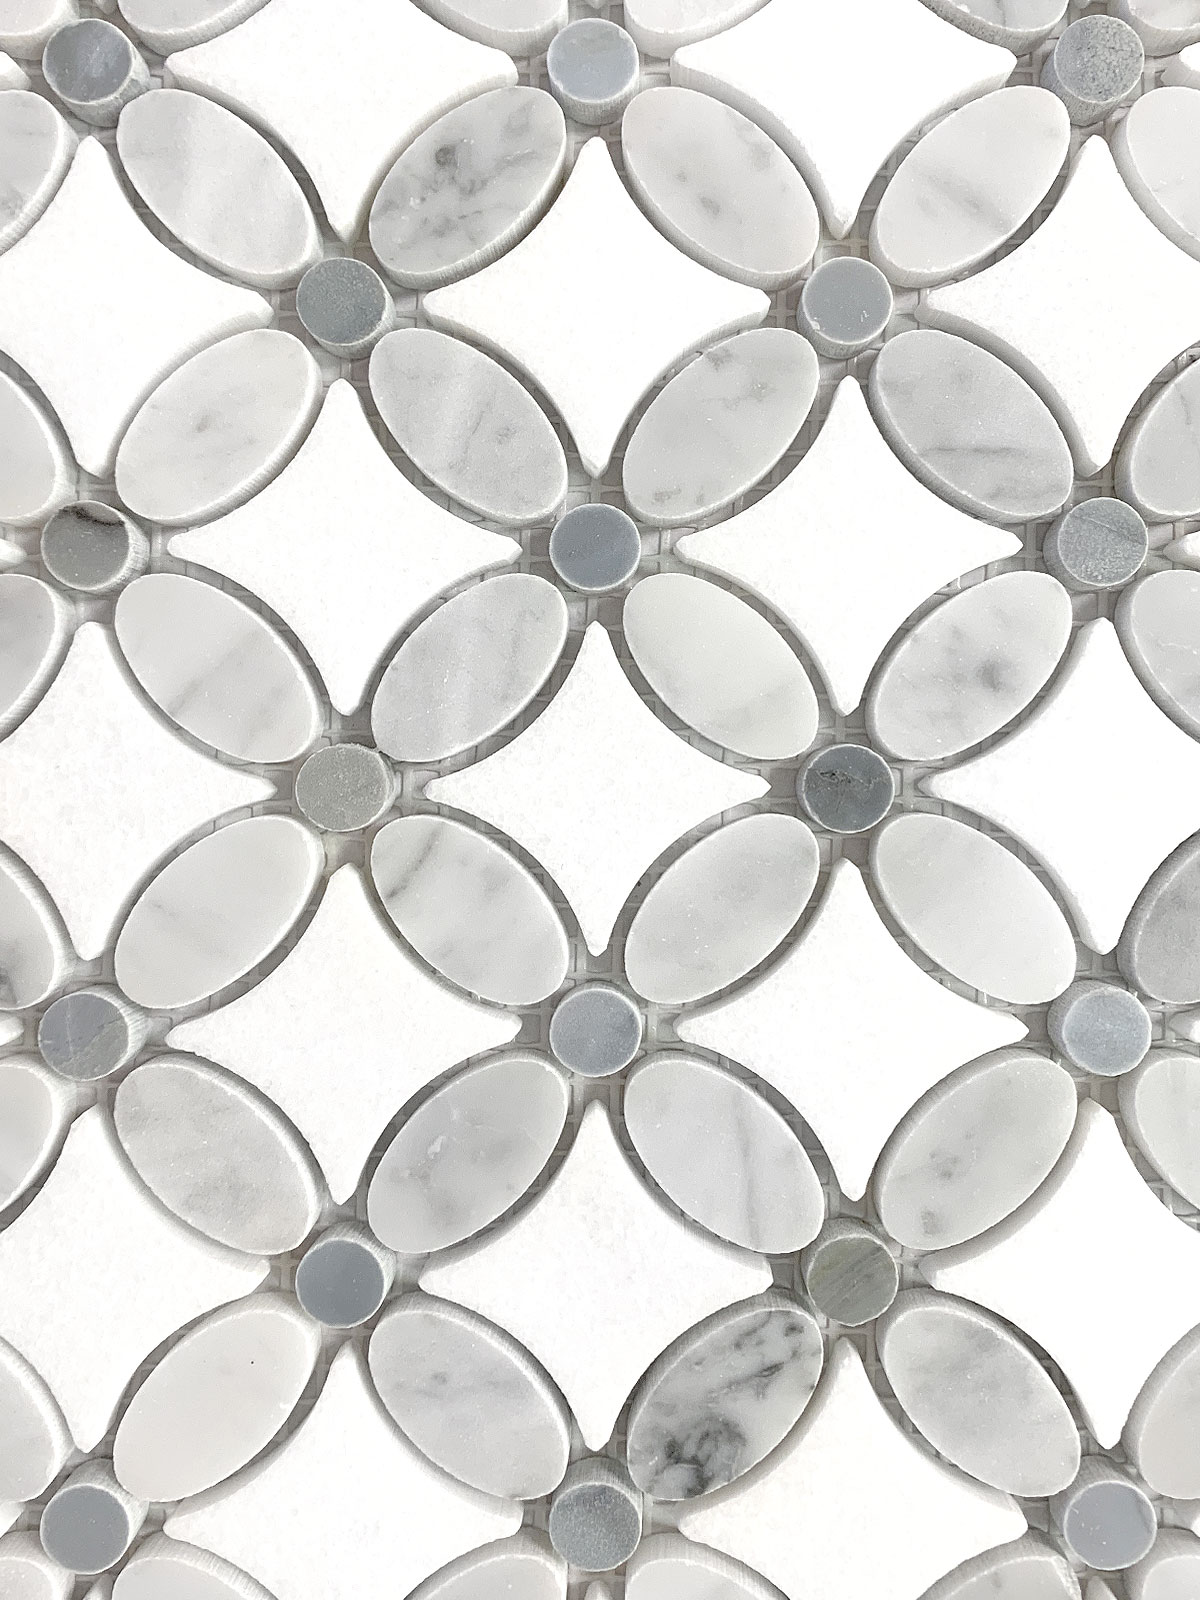 White & gray marble flower pattern floor wall mosaic tile